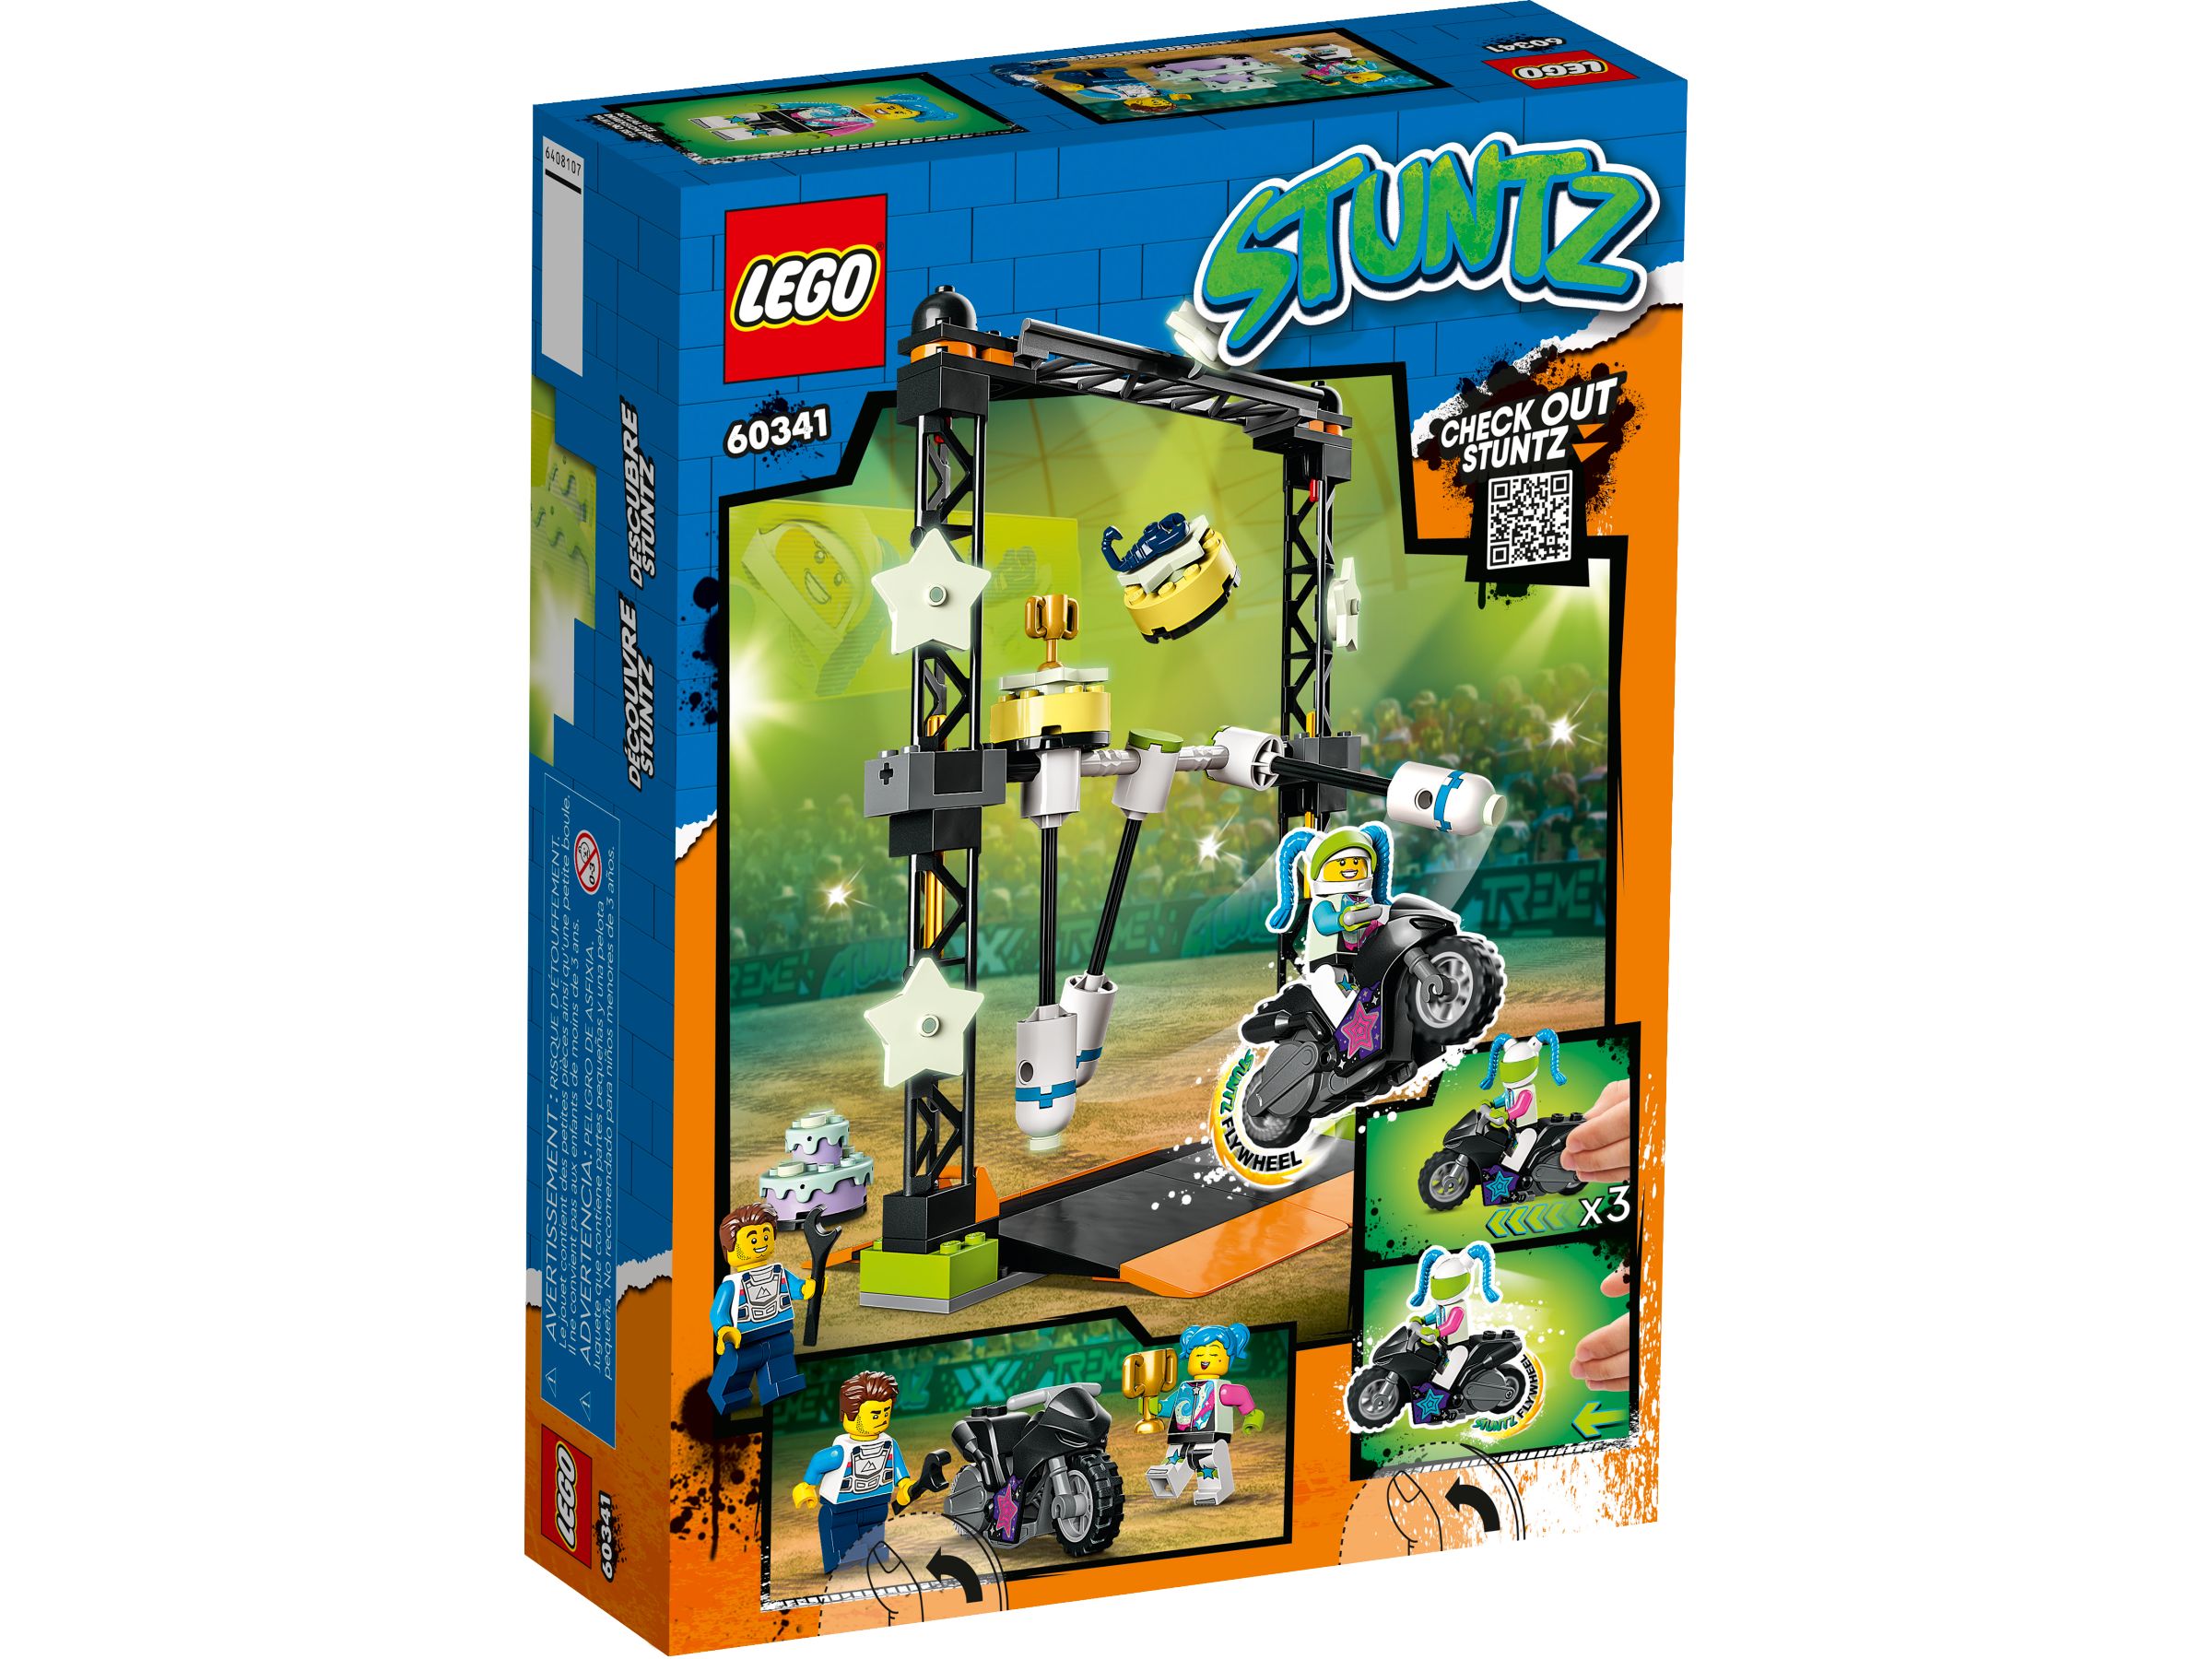 LEGO City 60341 Umstoß-Stuntchallenge LEGO_60341_alt7.jpg